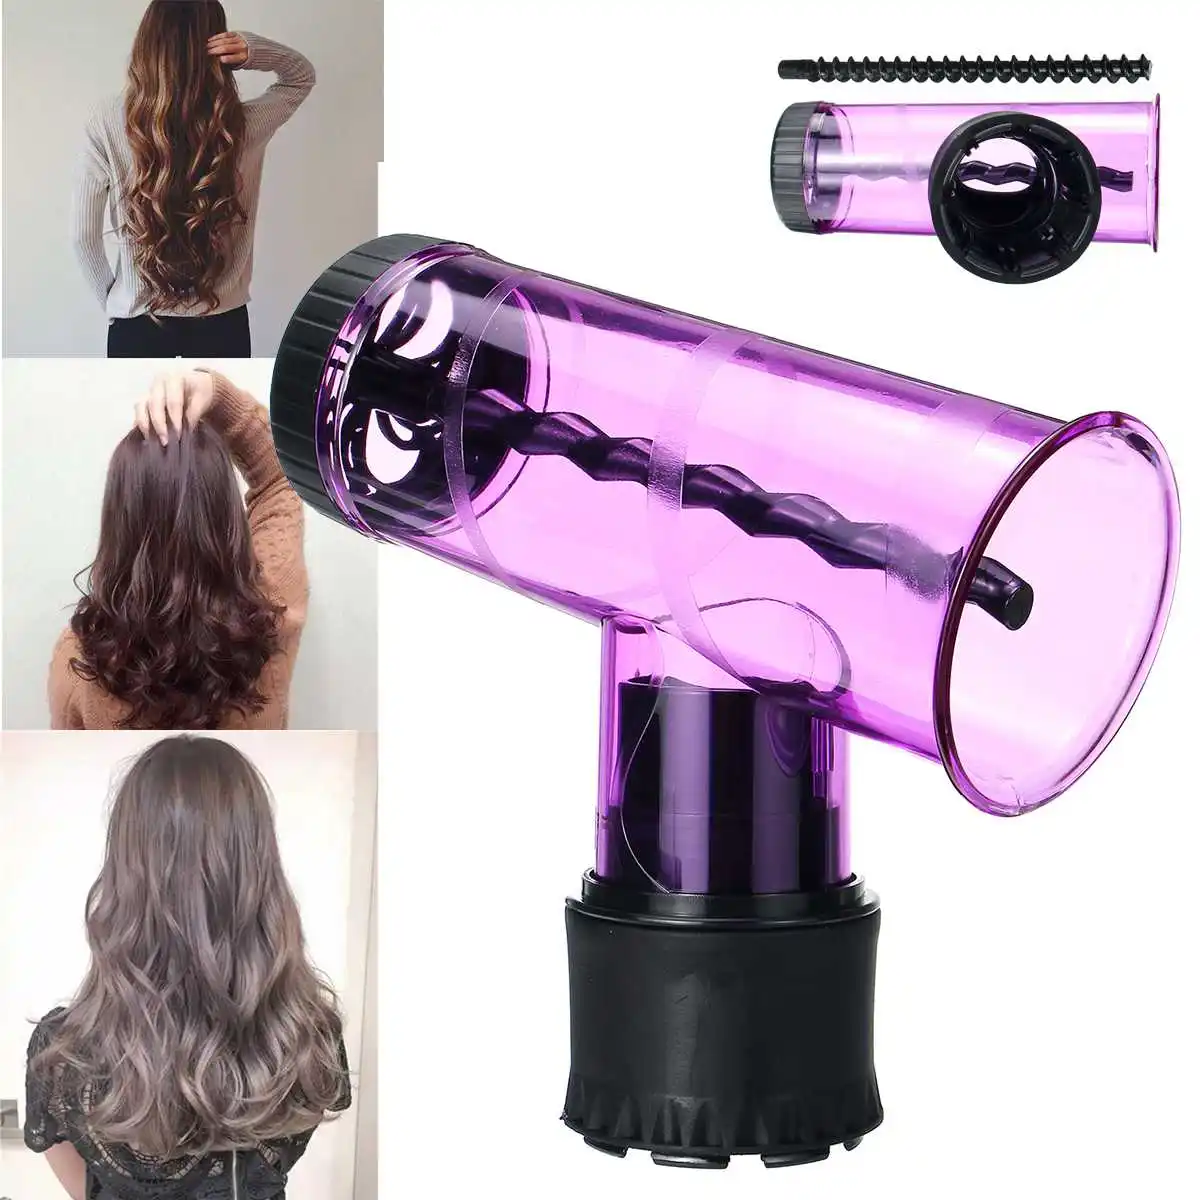 Диффузор для волос для салона, волшебная насадка для сушки волос, фен для завивки волос, насадка для завивки волос, распылитель для завивки волос, инструменты для укладки волос - Цвет: Purple